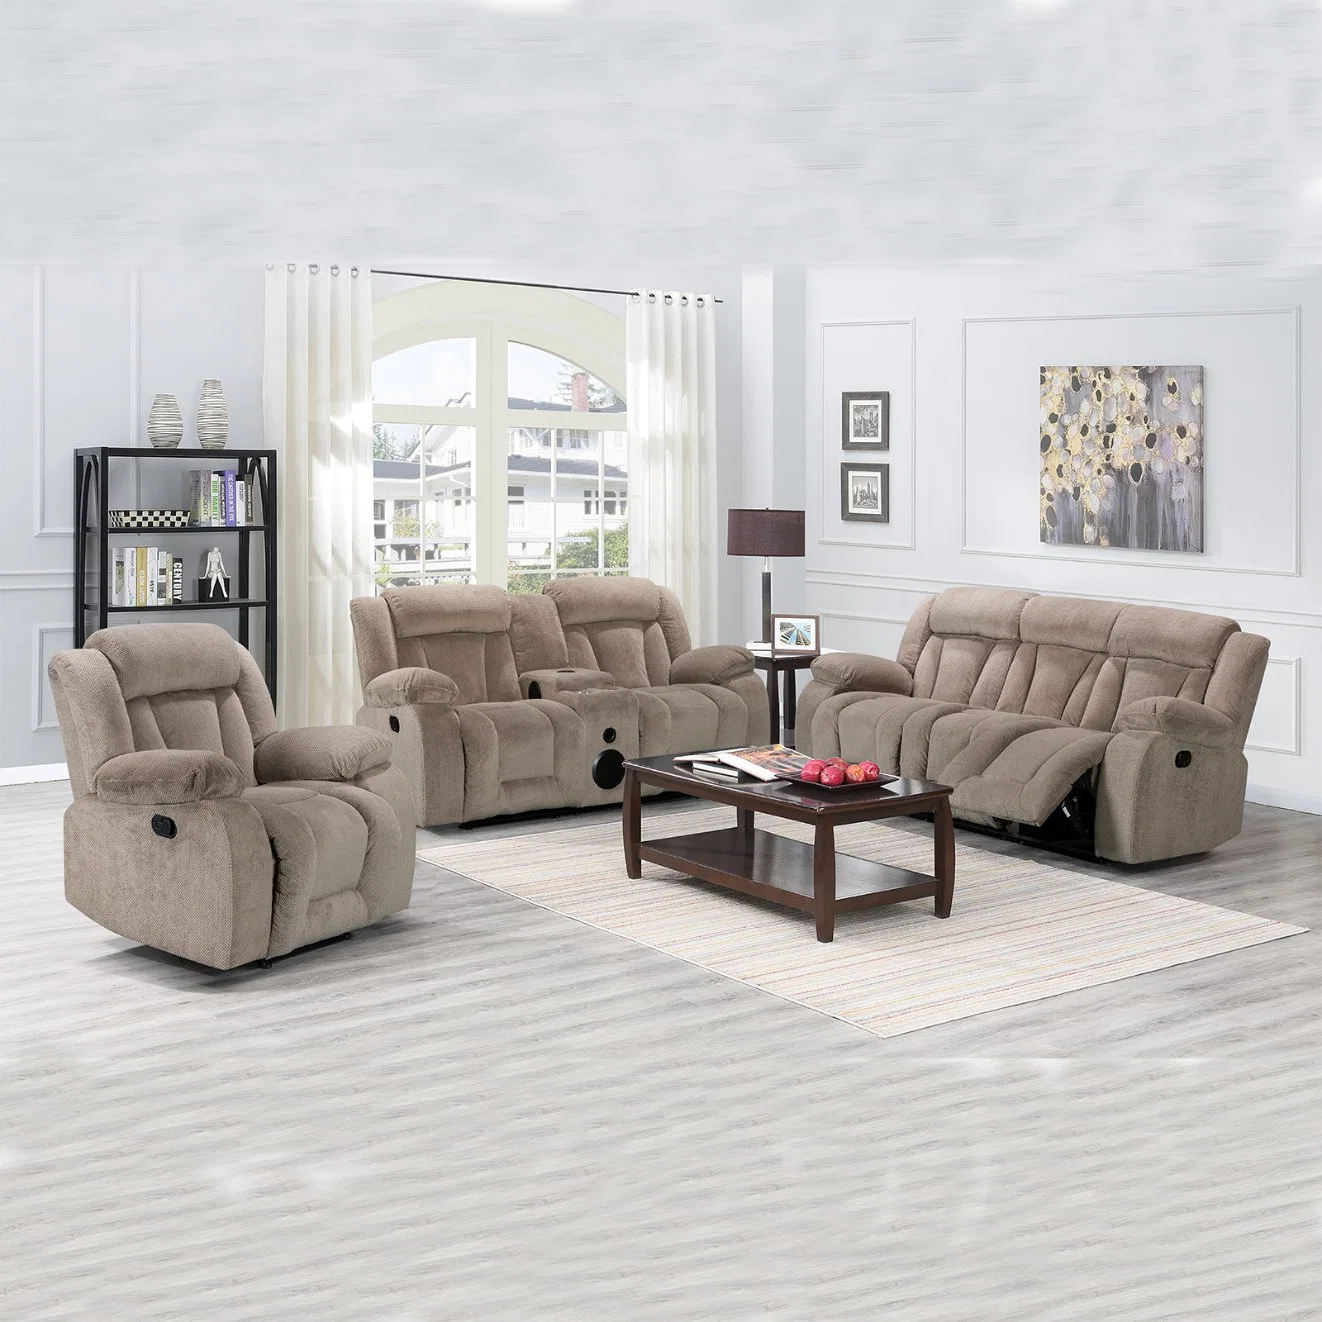 CY Manual Funktionelles Sofa-Sessel Sofa für Wohnzimmer Stuhl